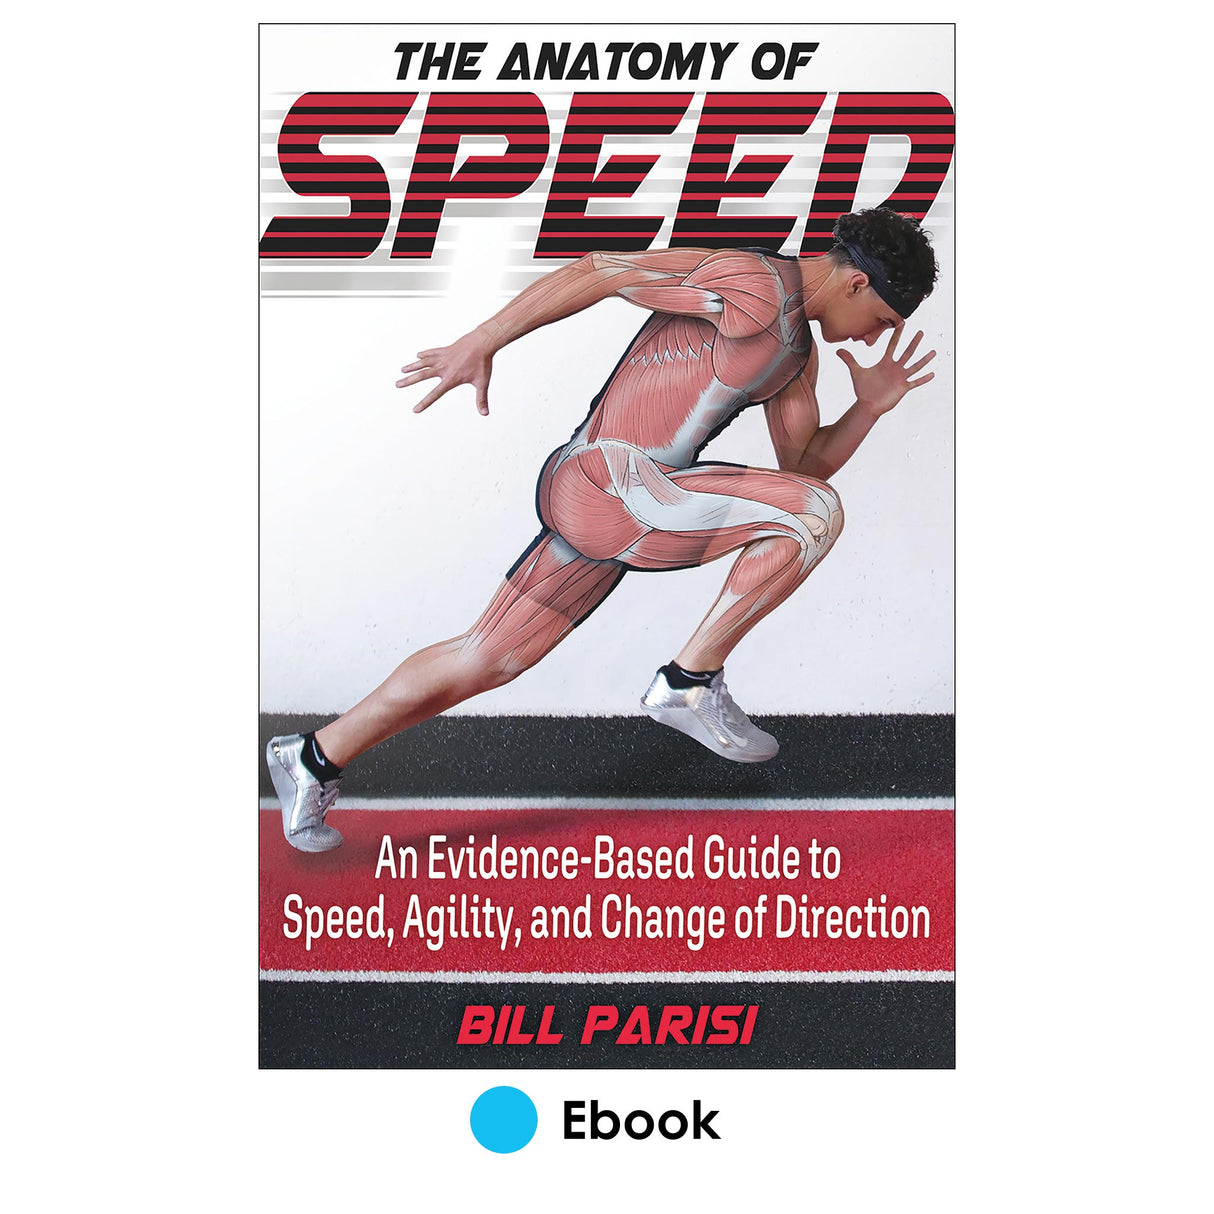 Anatomy of Speed epub, The